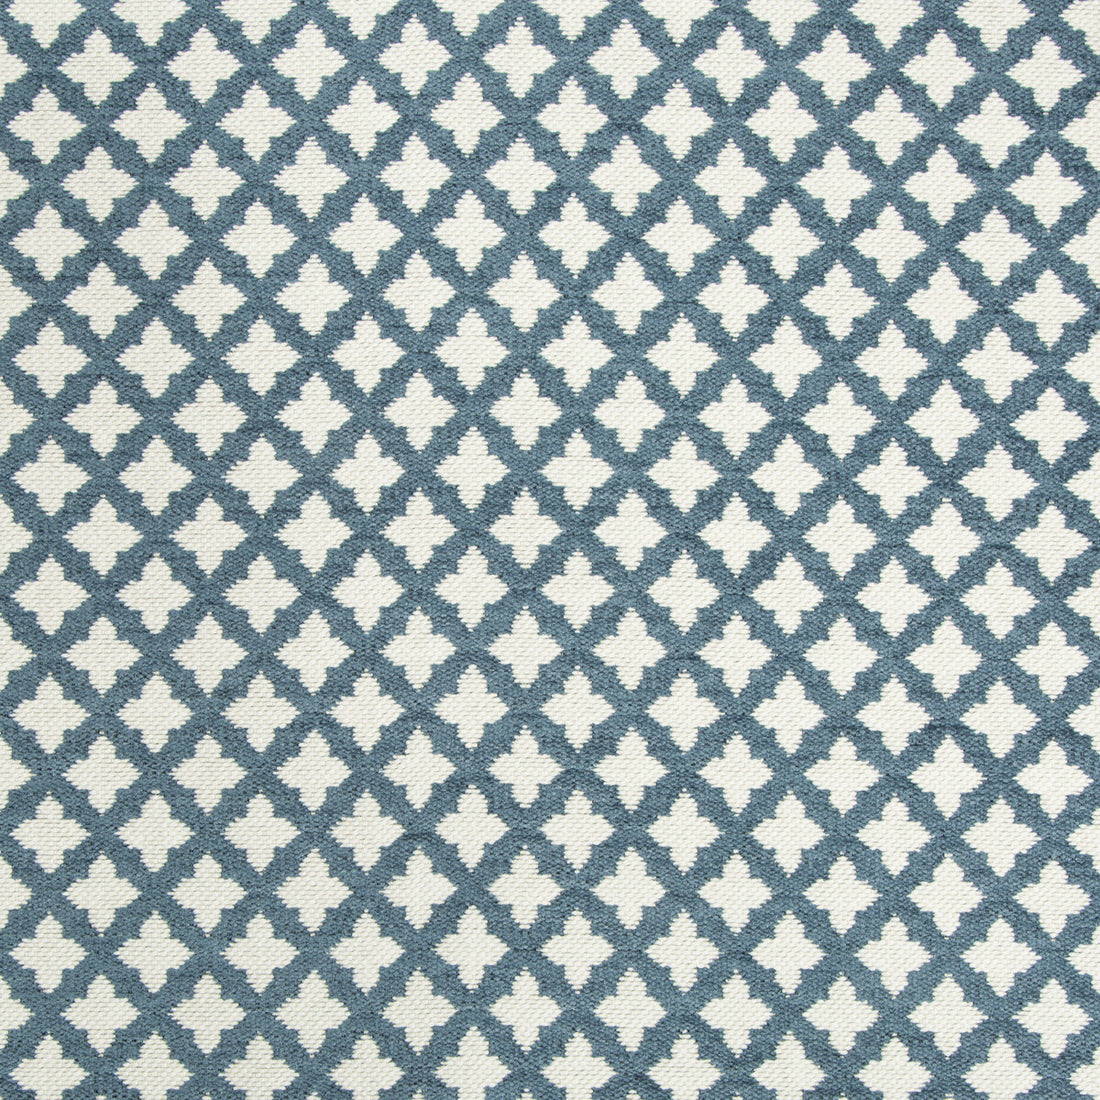 Kravet Design fabric in 34713-5 color - pattern 34713.5.0 - by Kravet Design in the Gis collection